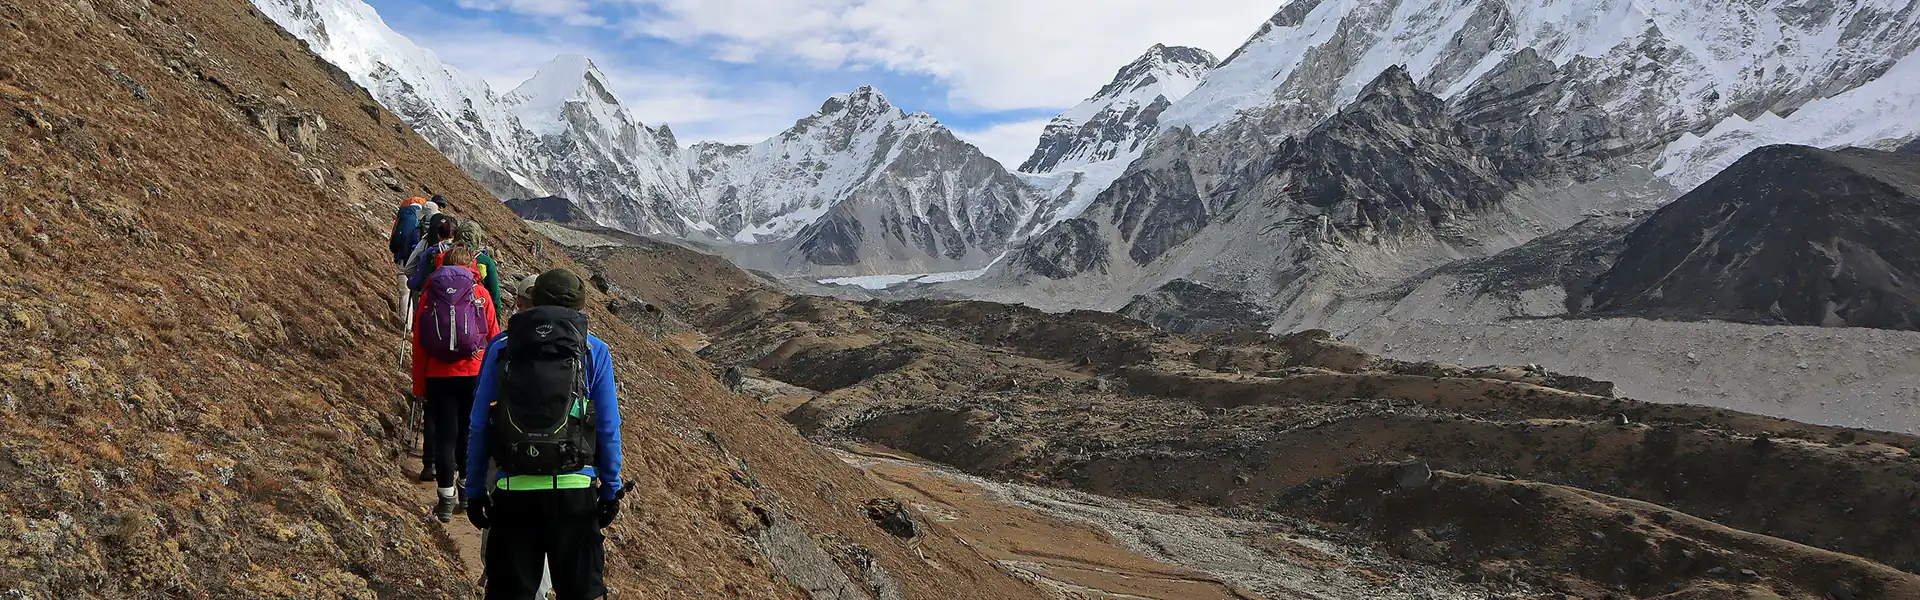 Nepal Travel Guide : Everest Base Camp Trekking